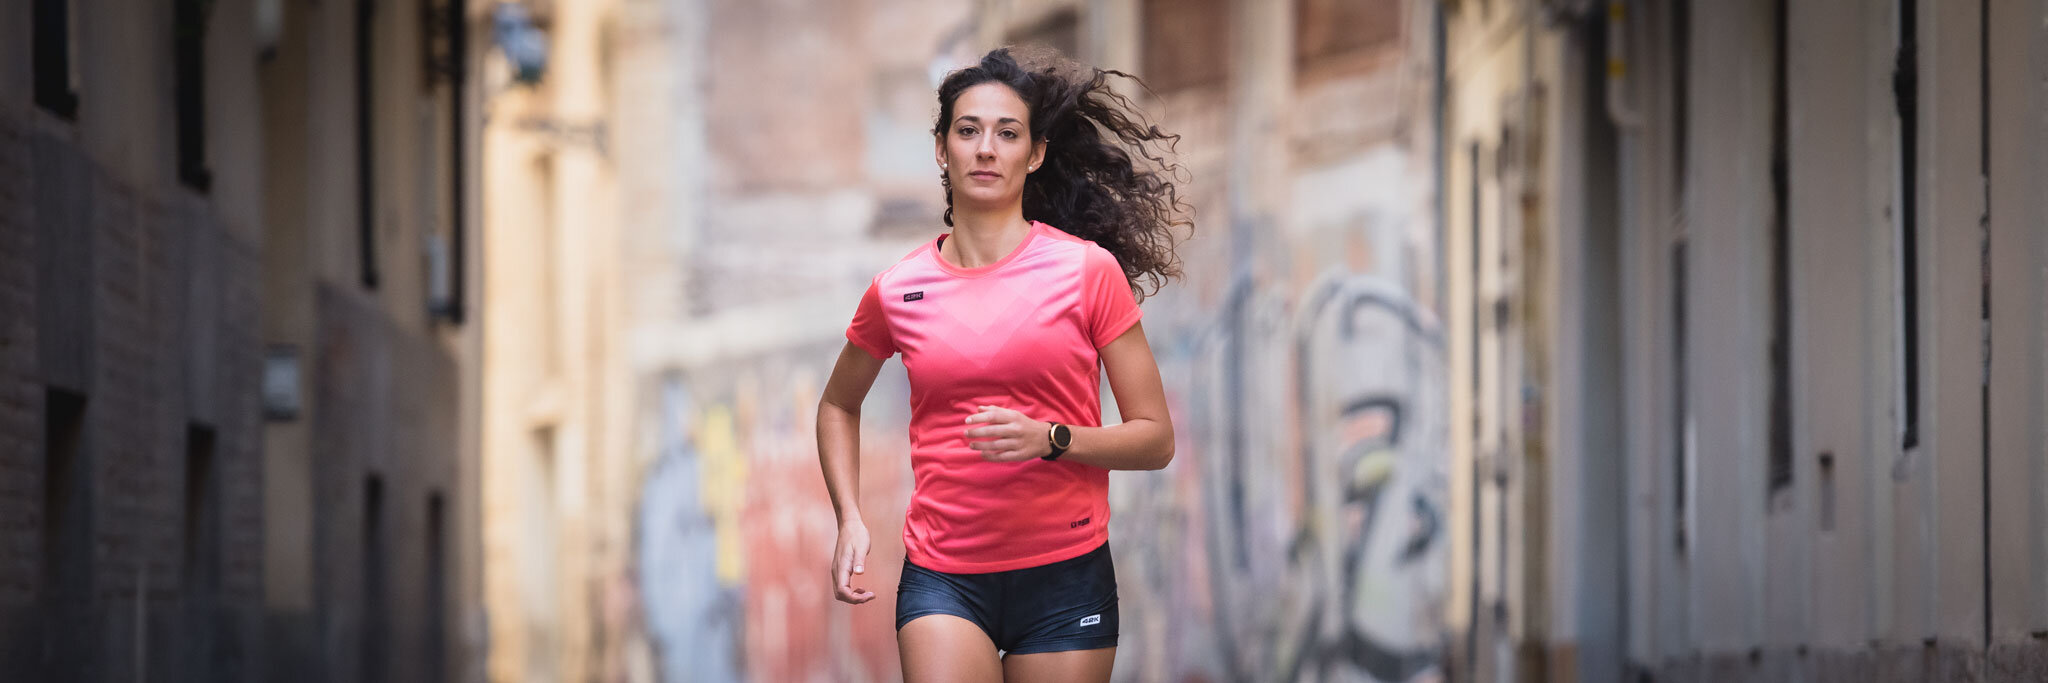 Running Women - Clothing running woman trail running and multisport